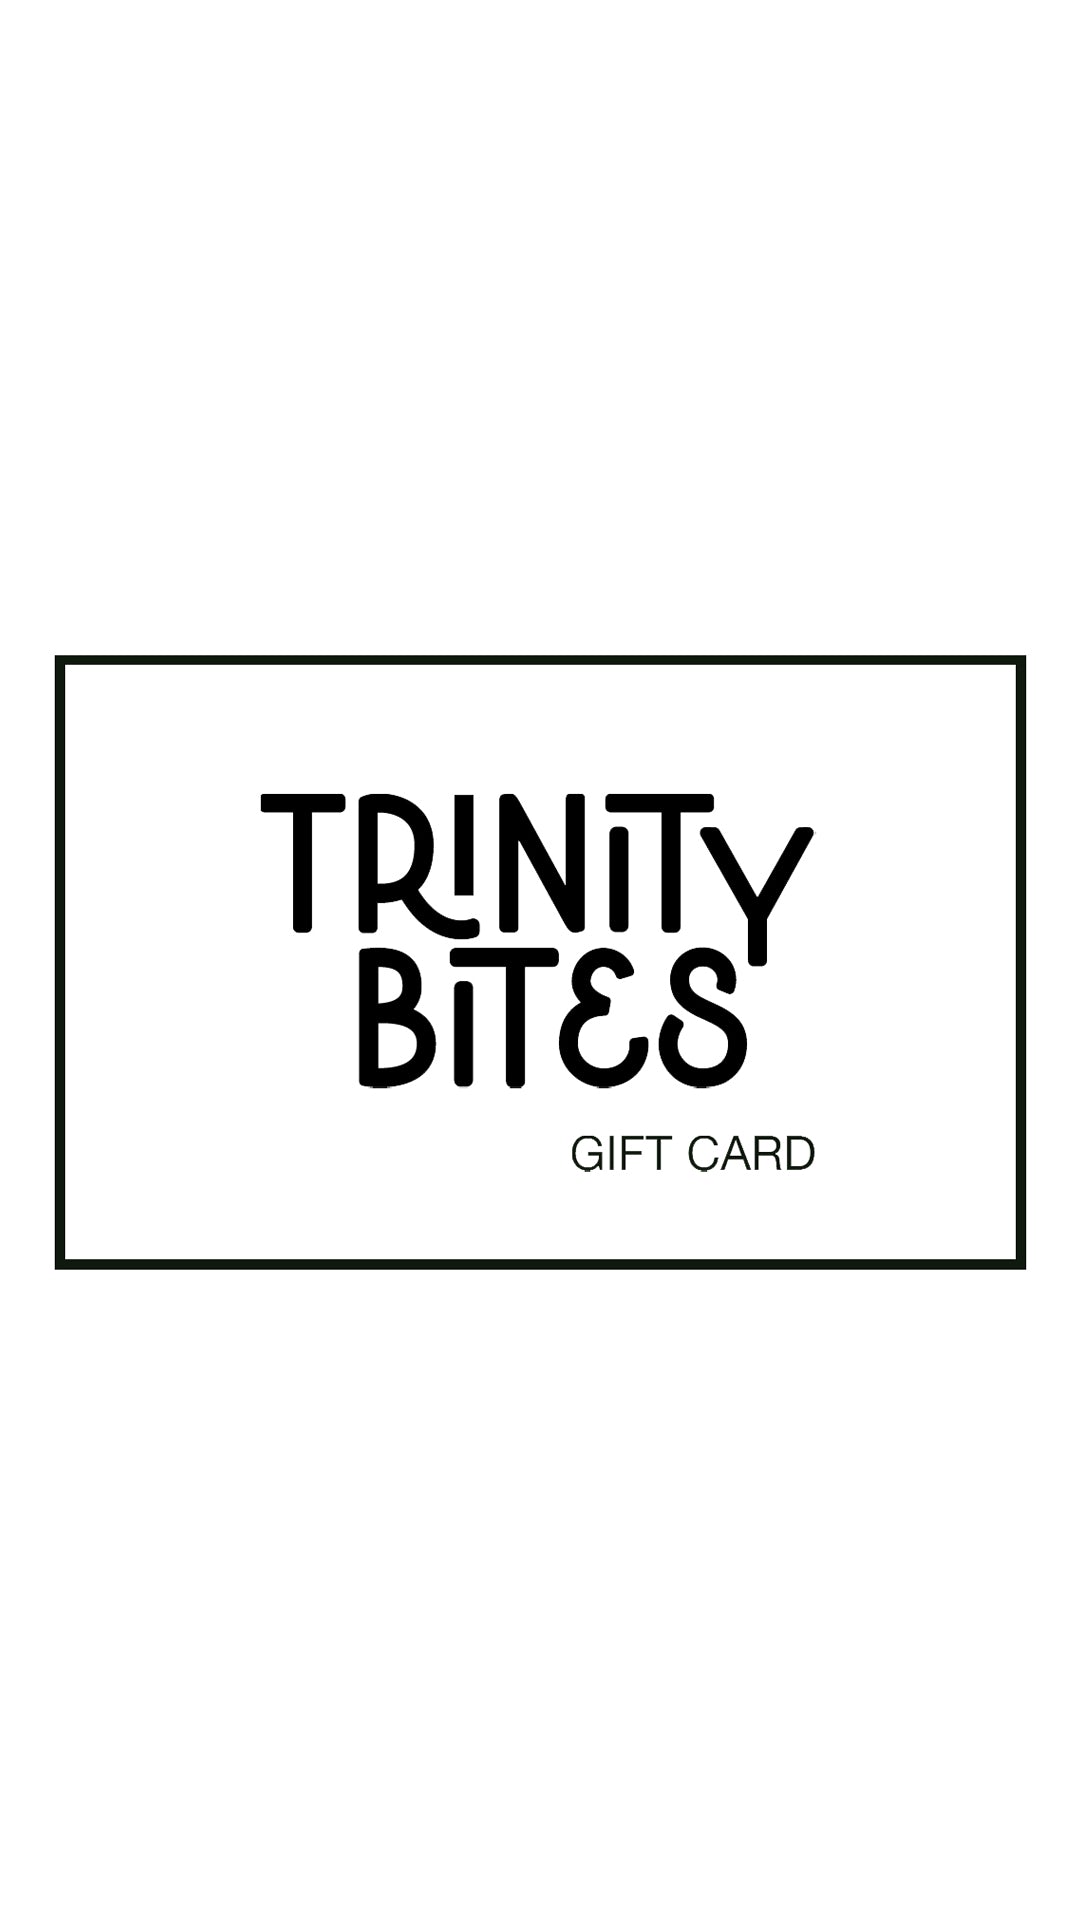 Trinity Bites Gift Card